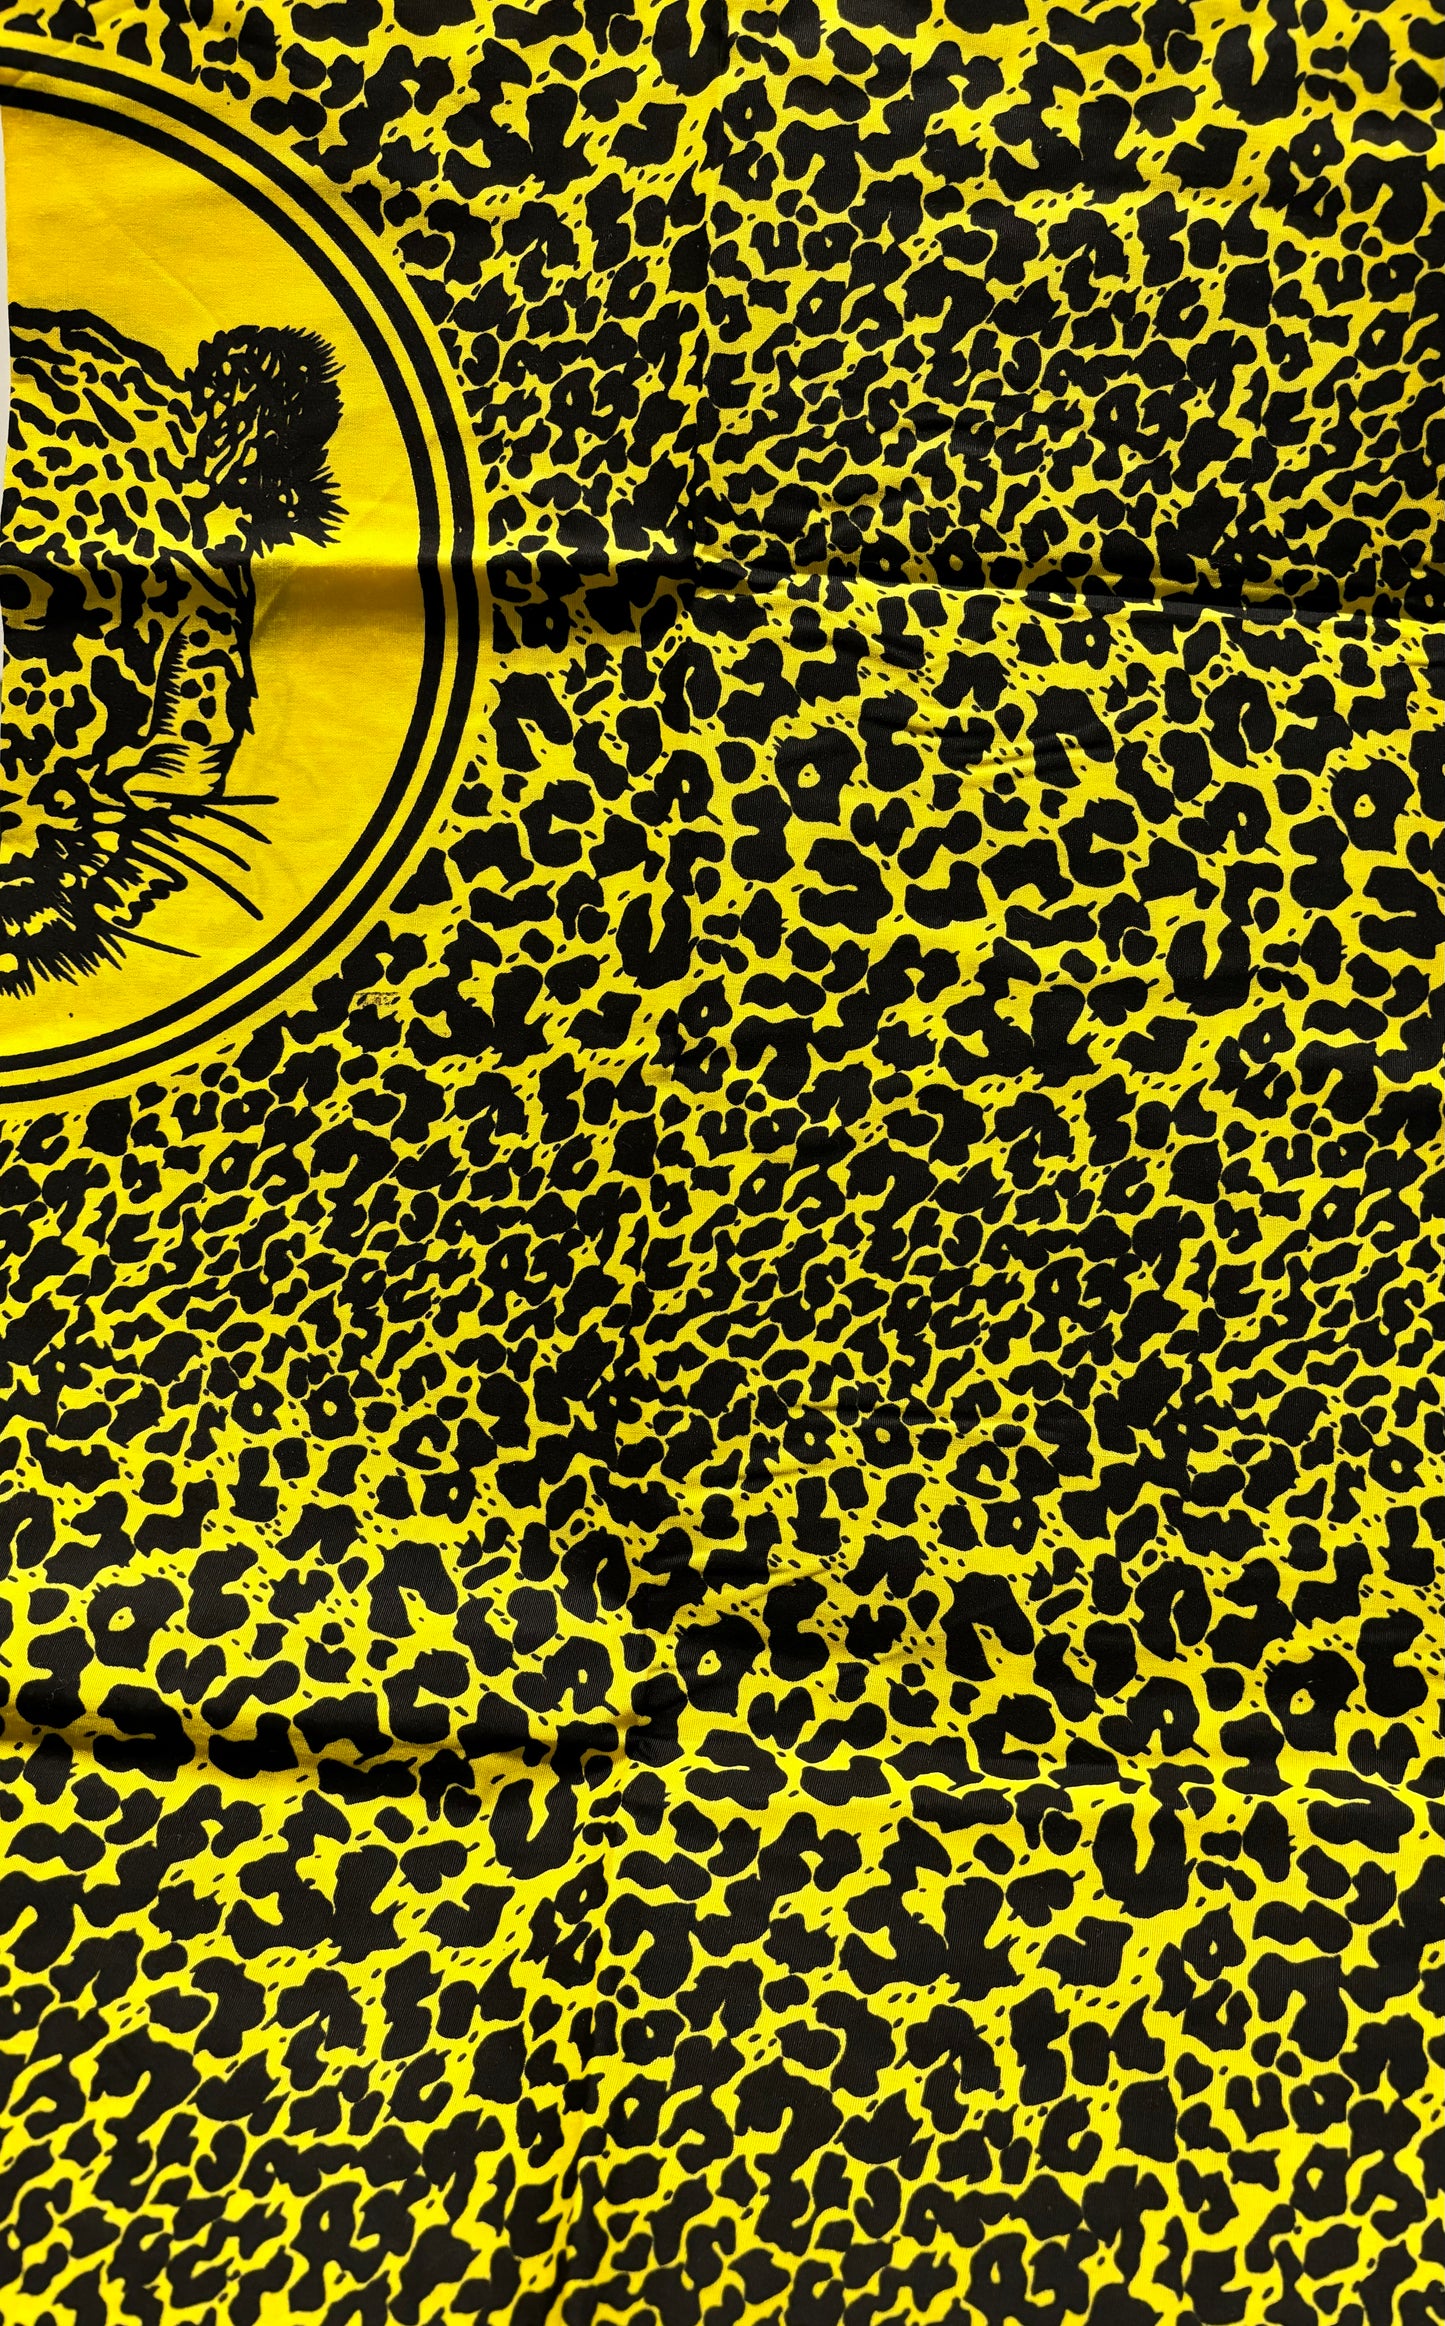 Yellow Leopard Print Ancestral Cloth